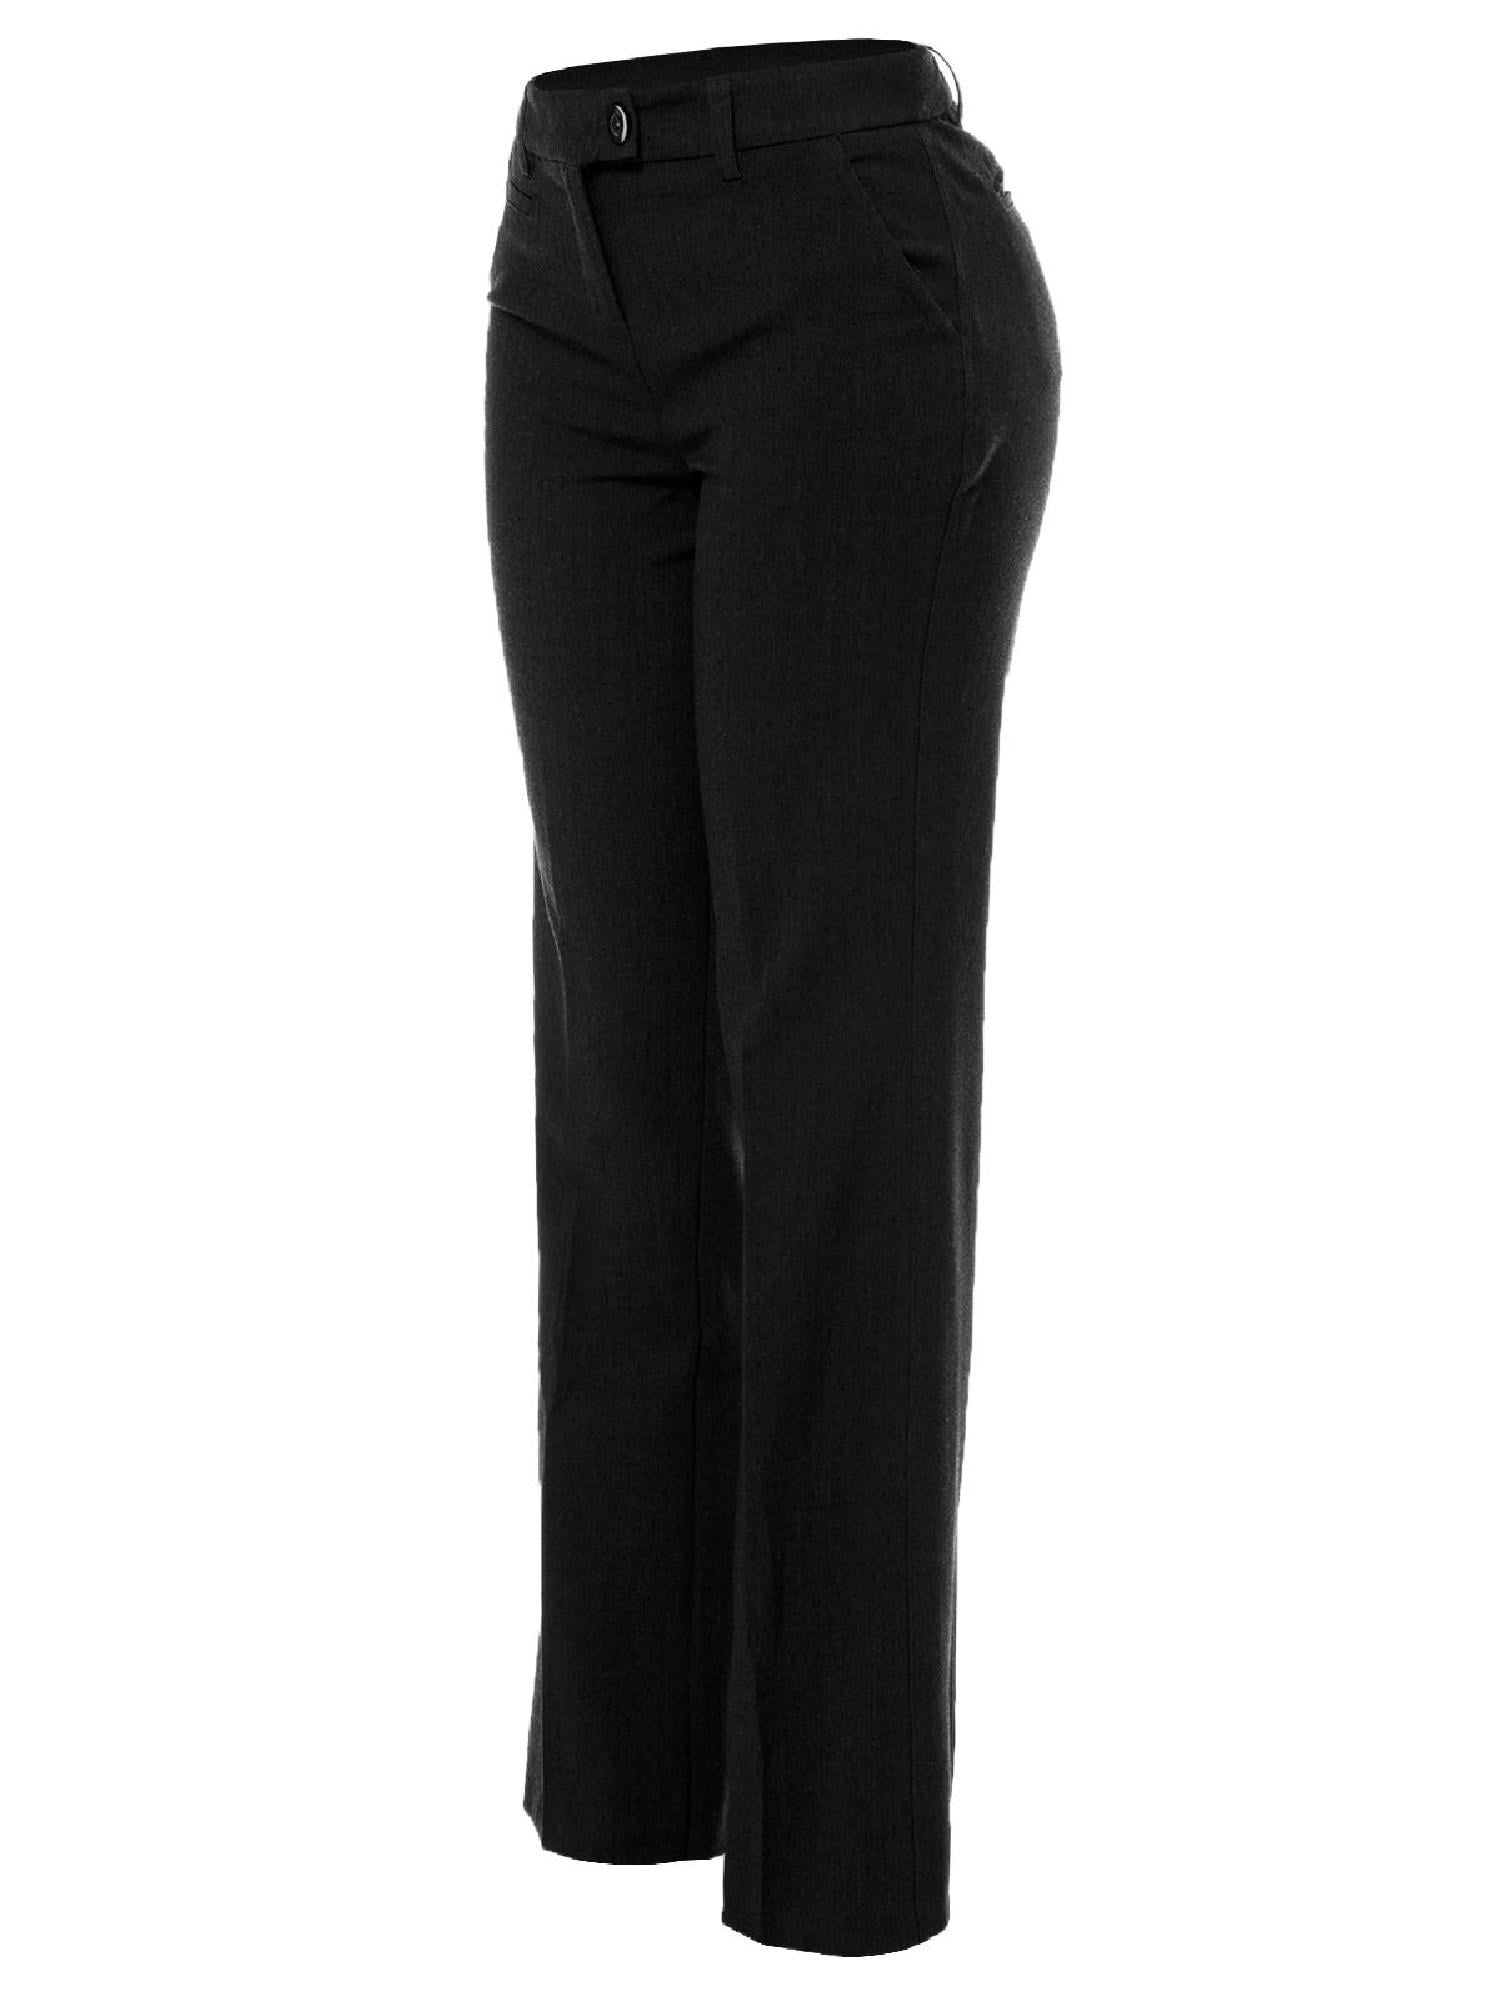 FITSIGHT Womens Work Causal Millennium Super Stretch Slim Fit Yoga Career  Dress Pant with Zip 5 Pocket (as1, Numeric, Numeric_8, Regular, Regular,  Black, Regular) at Amazon Women's Clothing store